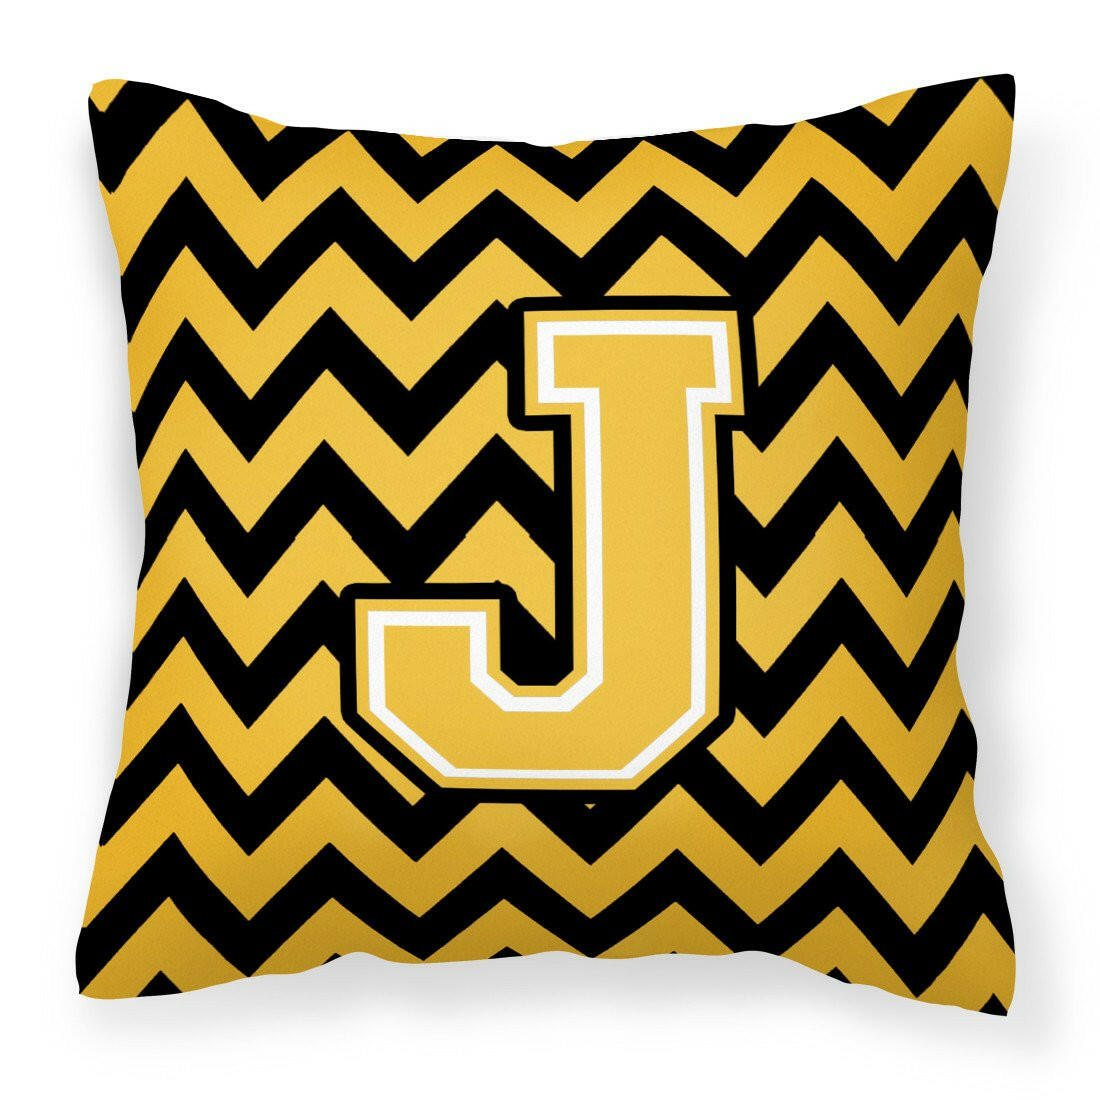 Letter J Chevron Black and Gold Fabric Decorative Pillow CJ1053-JPW1414 by Caroline's Treasures